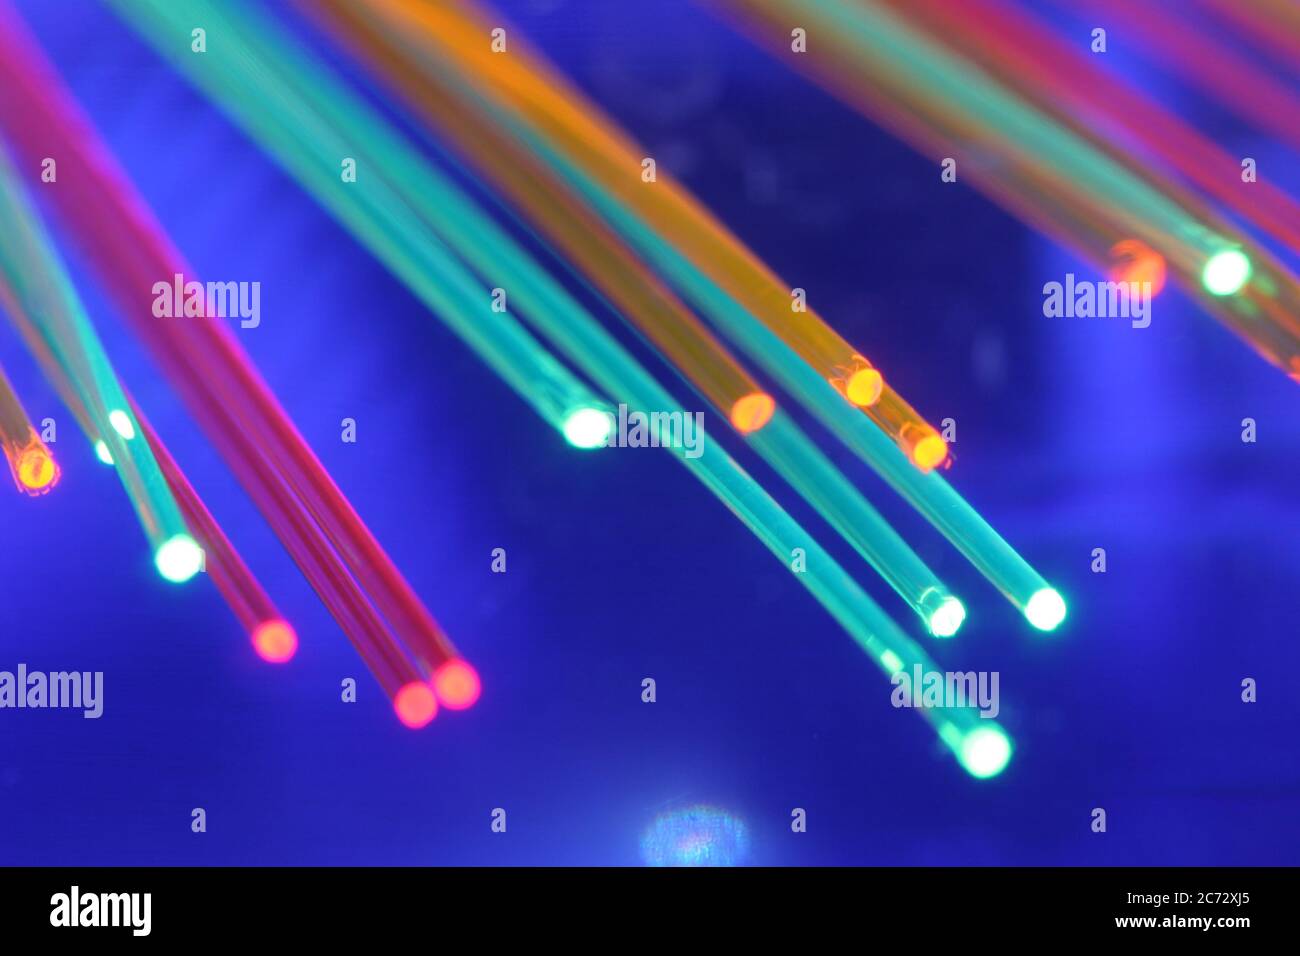 Colorful light emitting fiber optic fiber strains on a blue background. Stock Photo